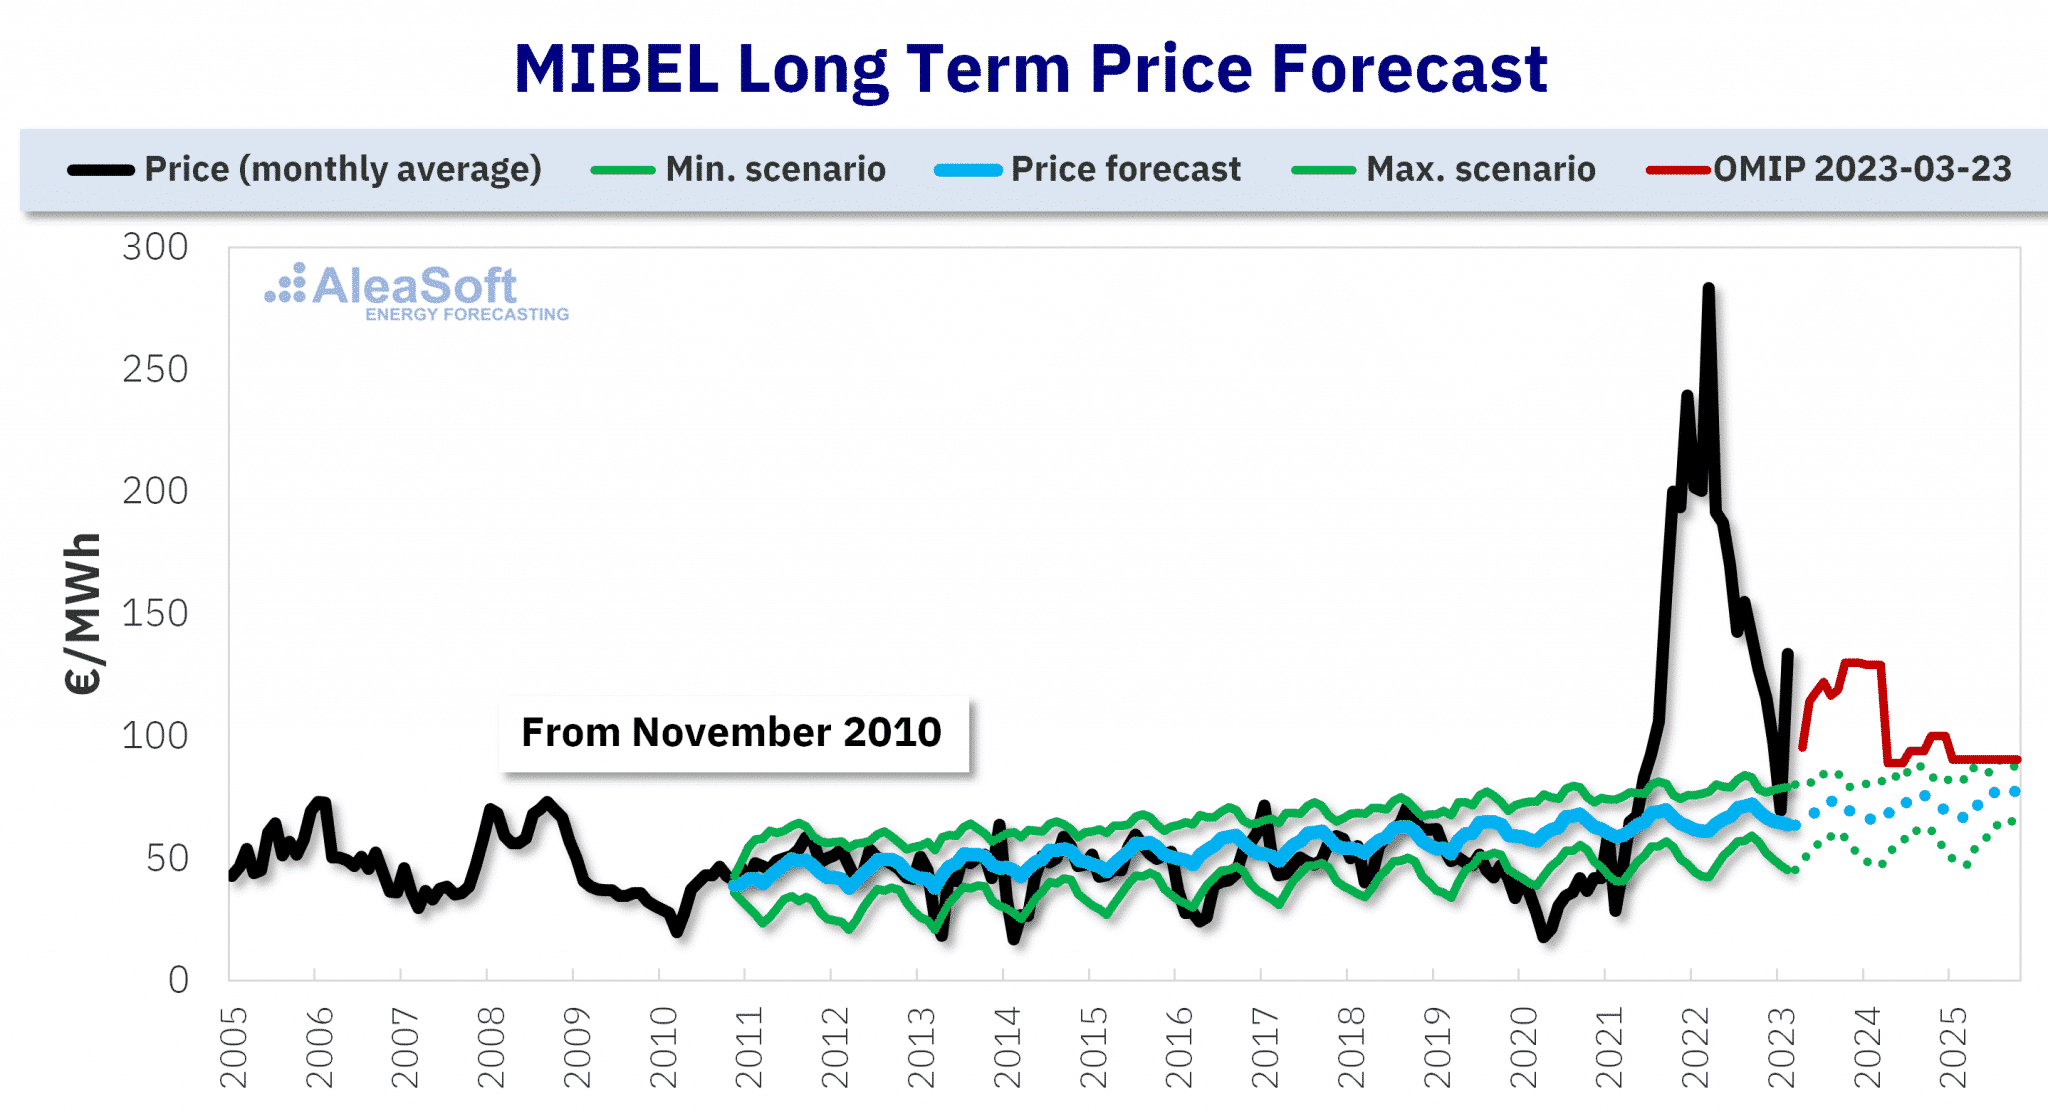 AleaSoft - MIBEL long term price forecasting